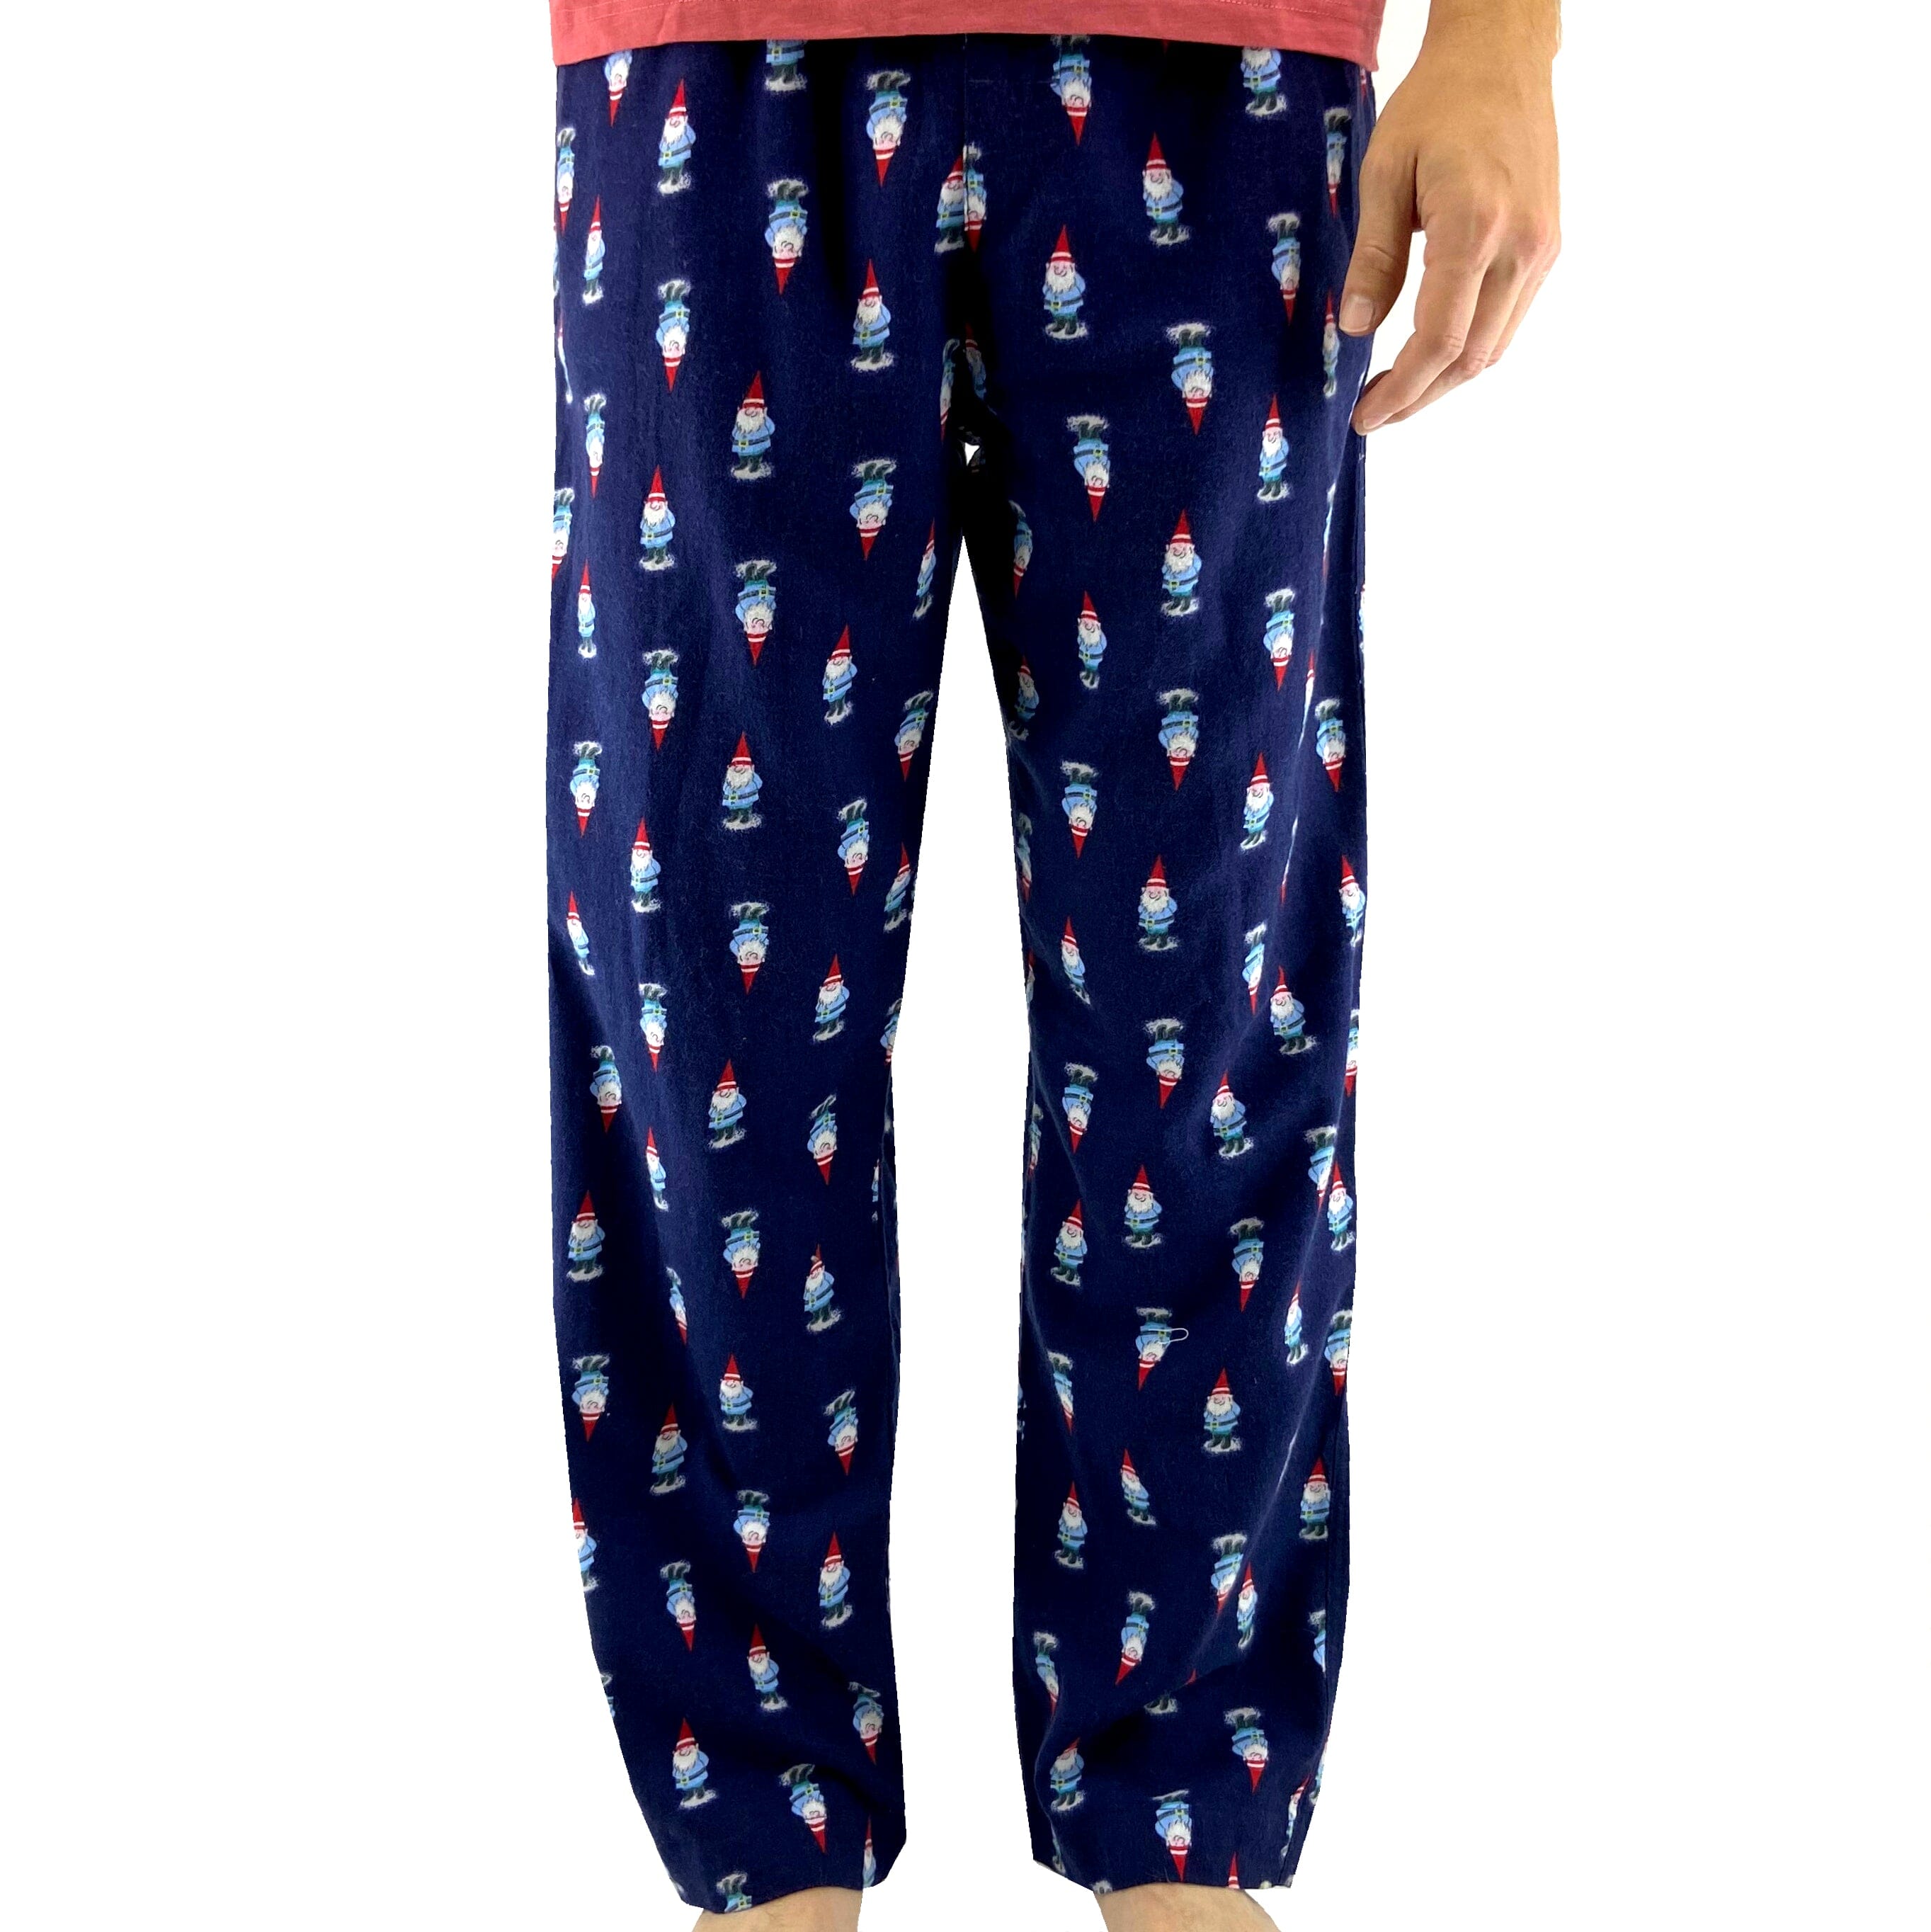 Men's Garden Gnome Patterned Printed Woven Cotton Long PJ Pajama Pants